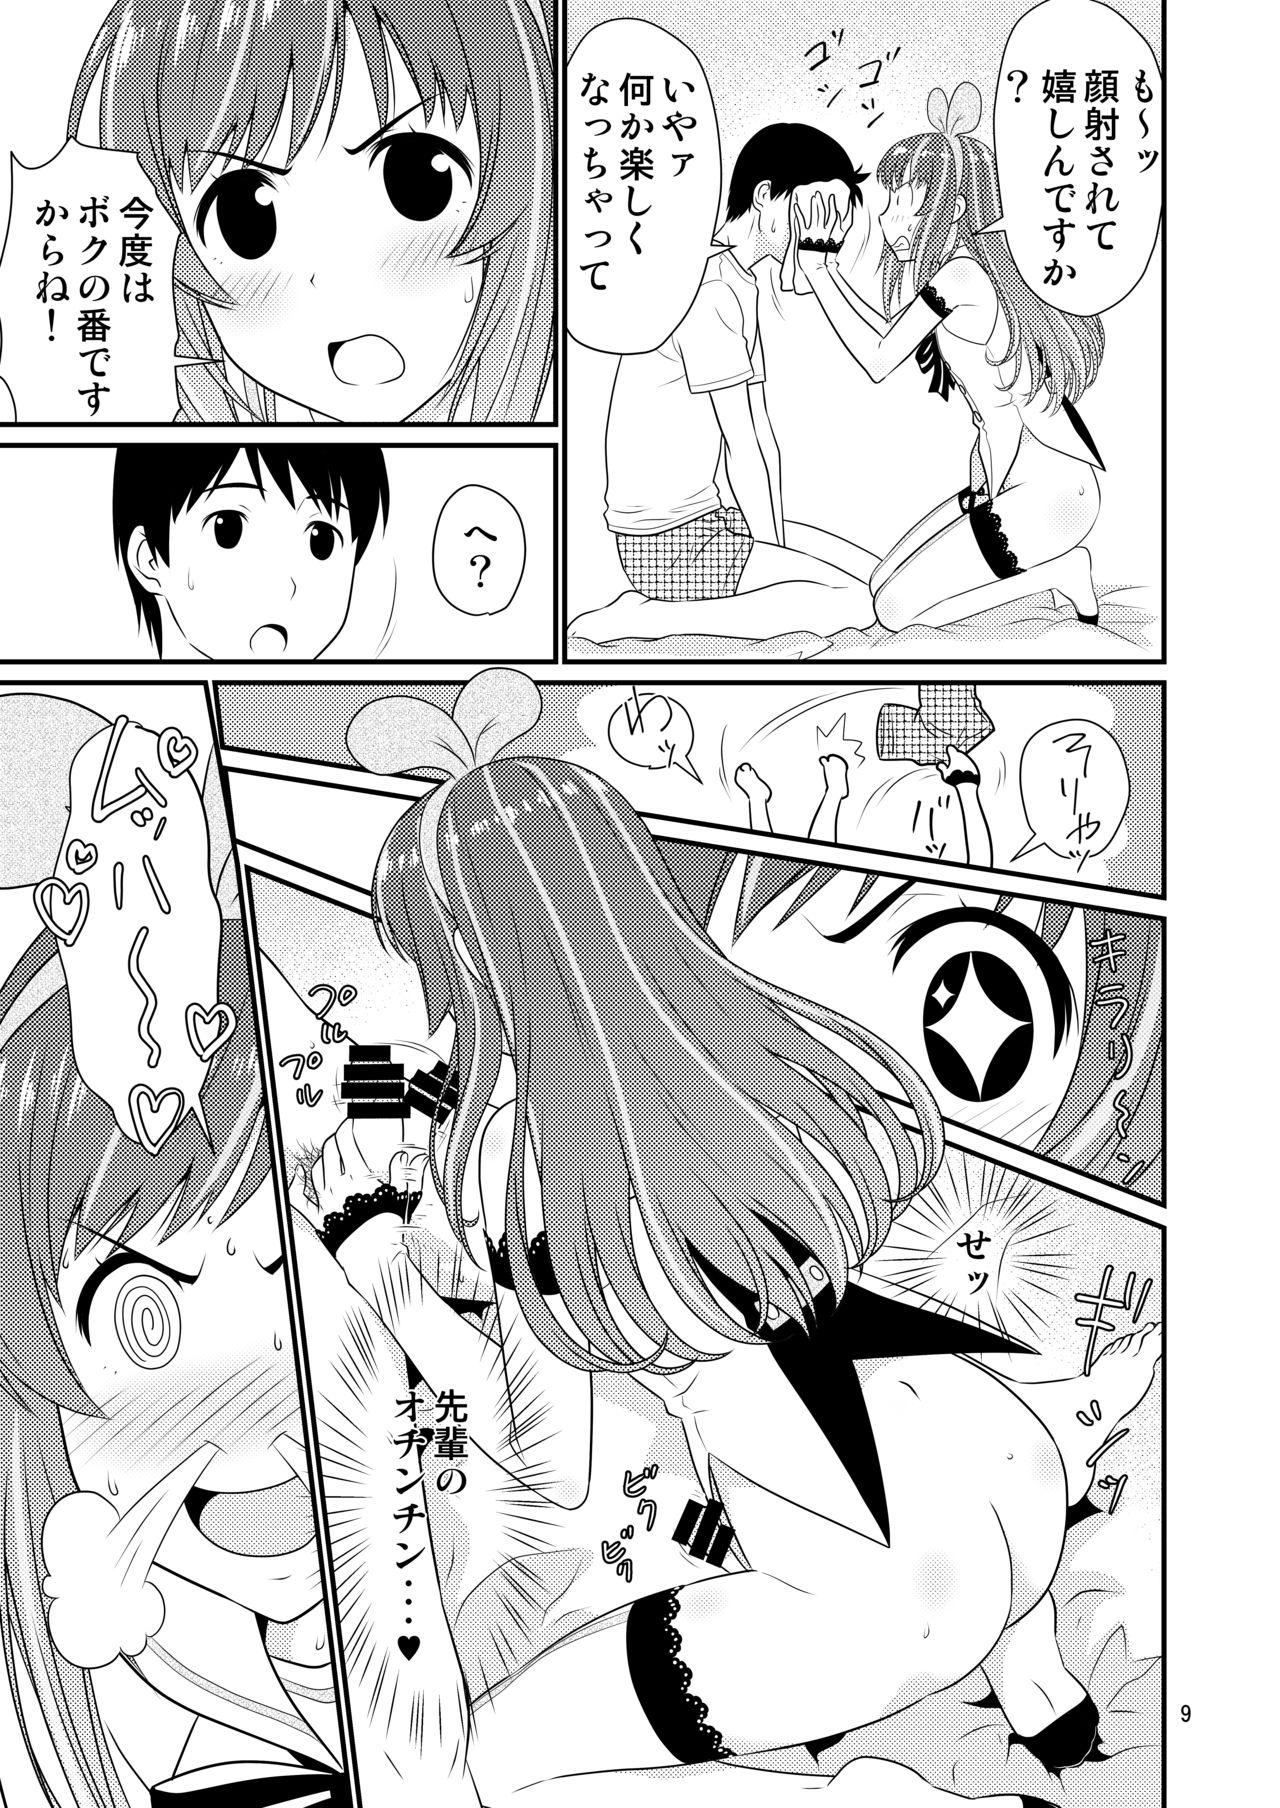 Load Cosplay Otokonoko to Marumaru! Lick - Page 9